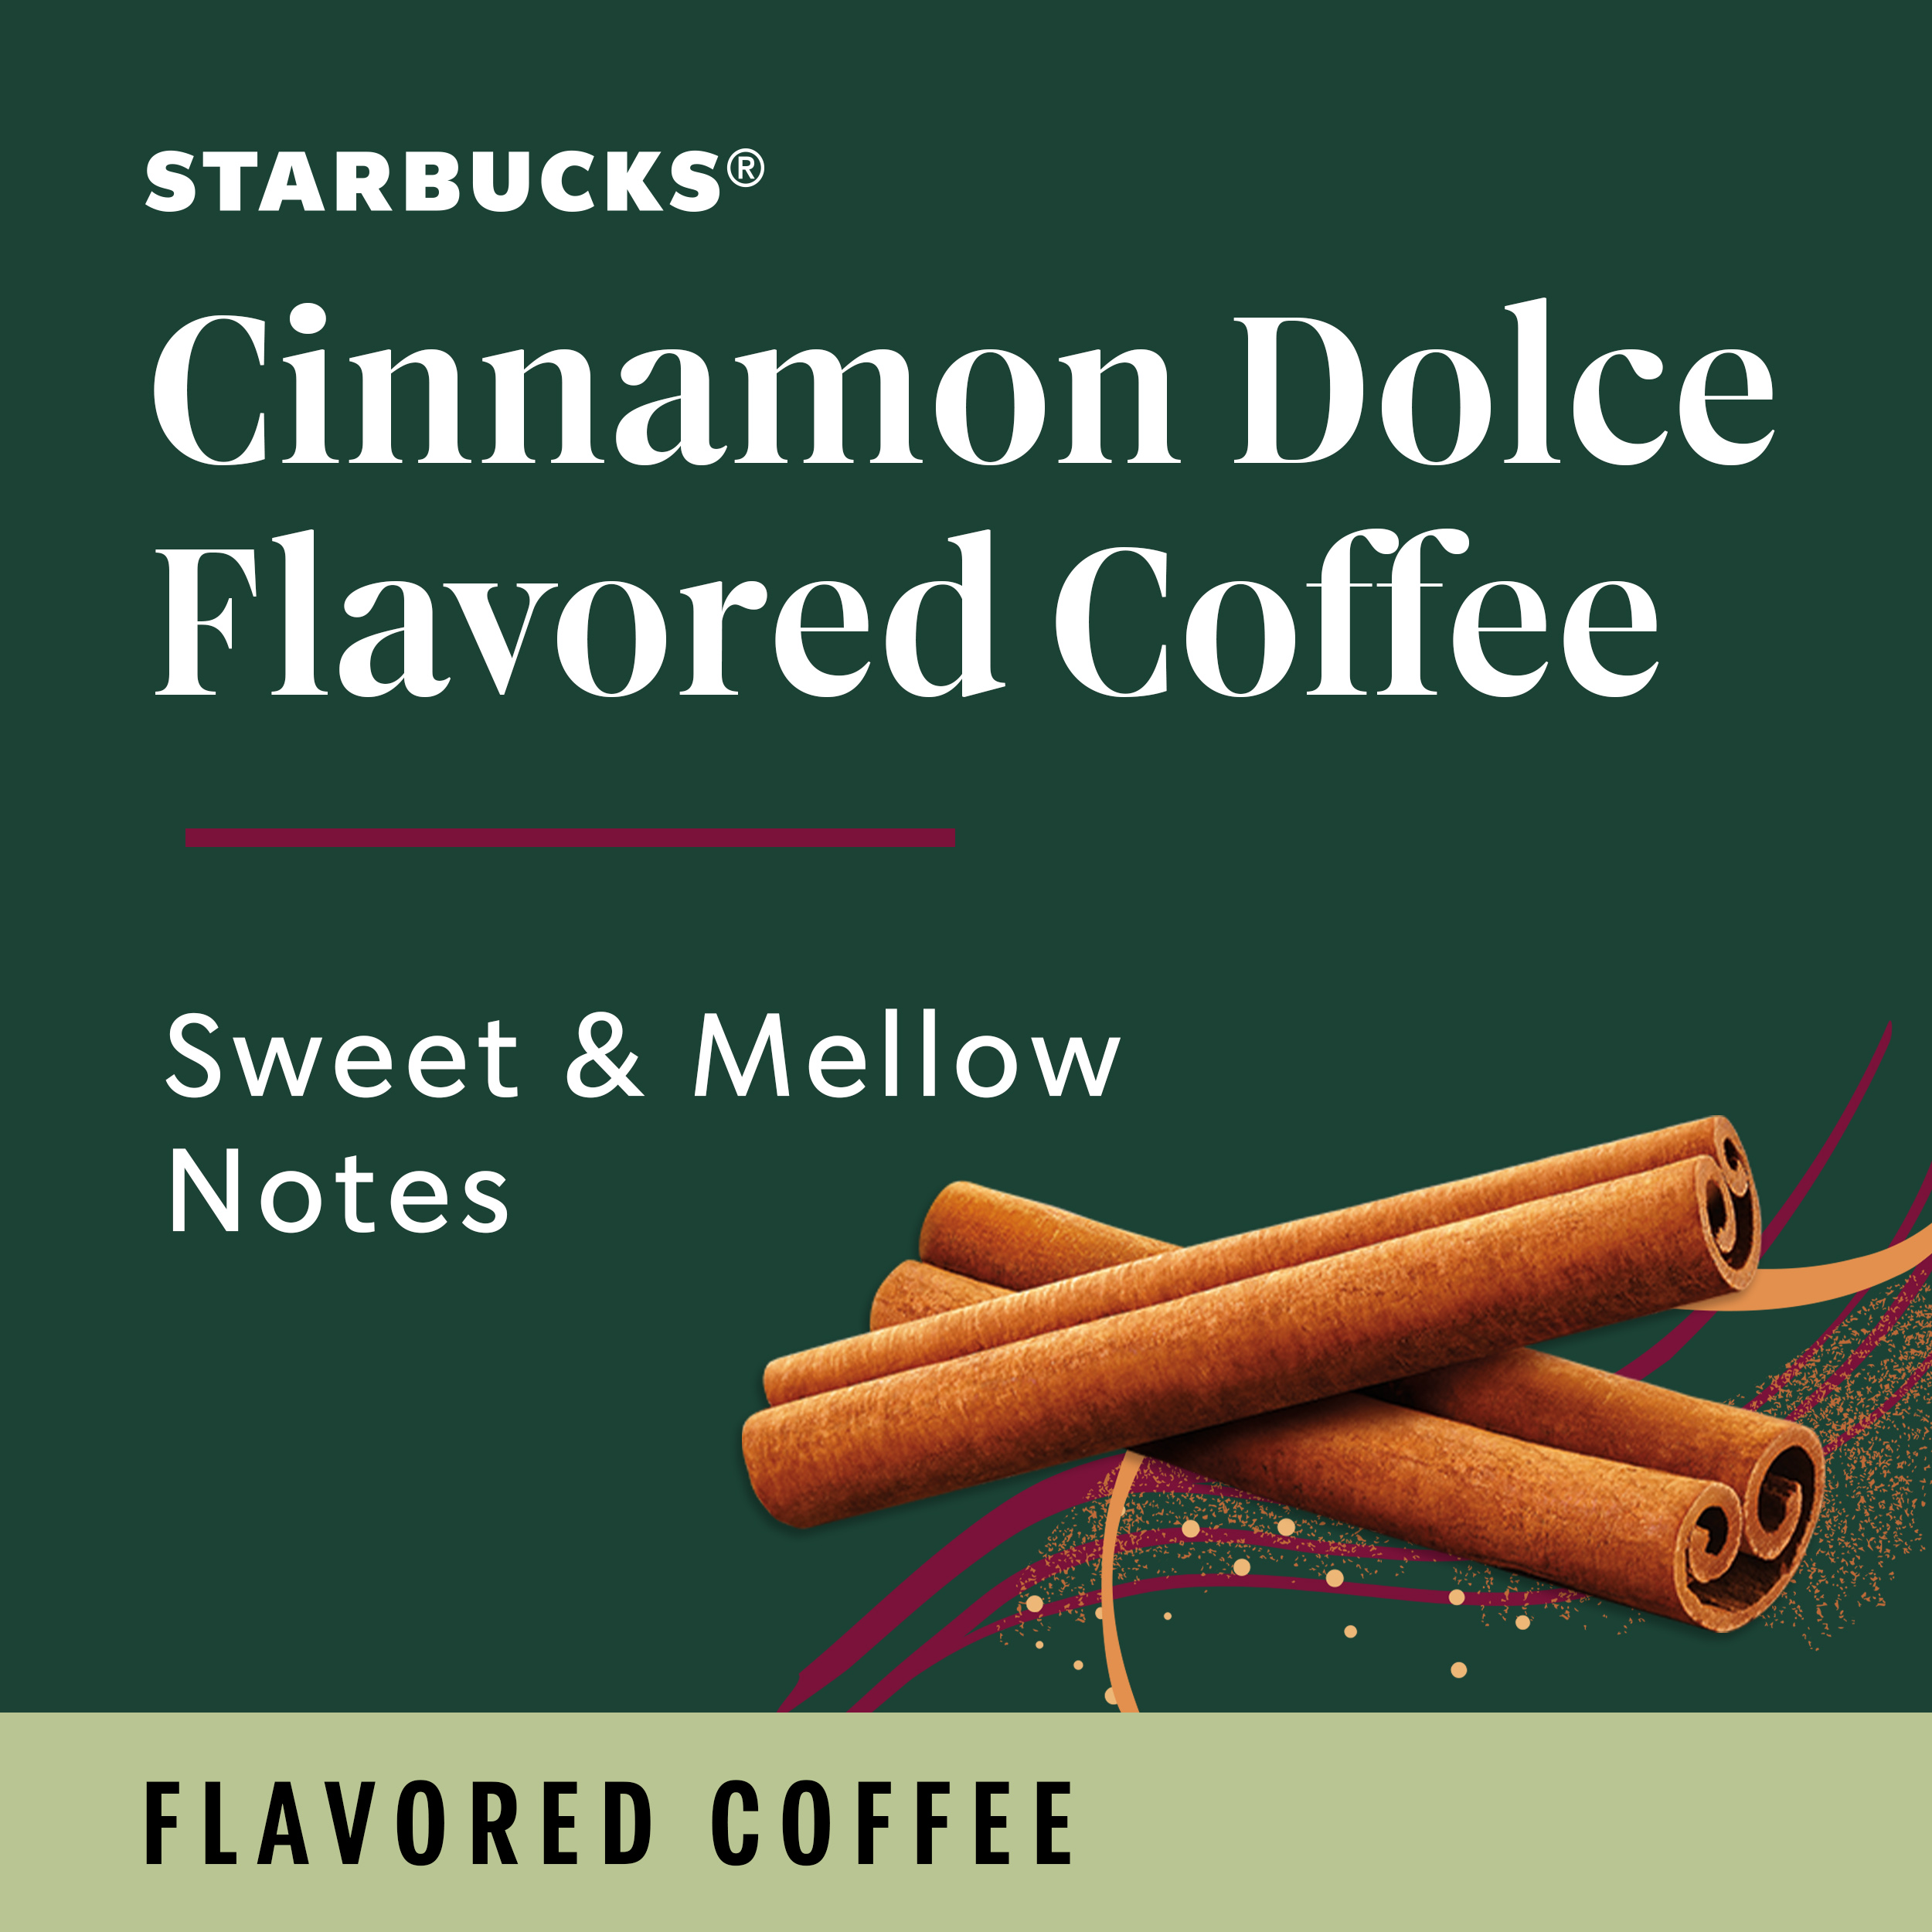 Starbucks Arabica Beans Cinnamon Dolce, Light Roast, Ground Coffee, 11 oz - image 3 of 8